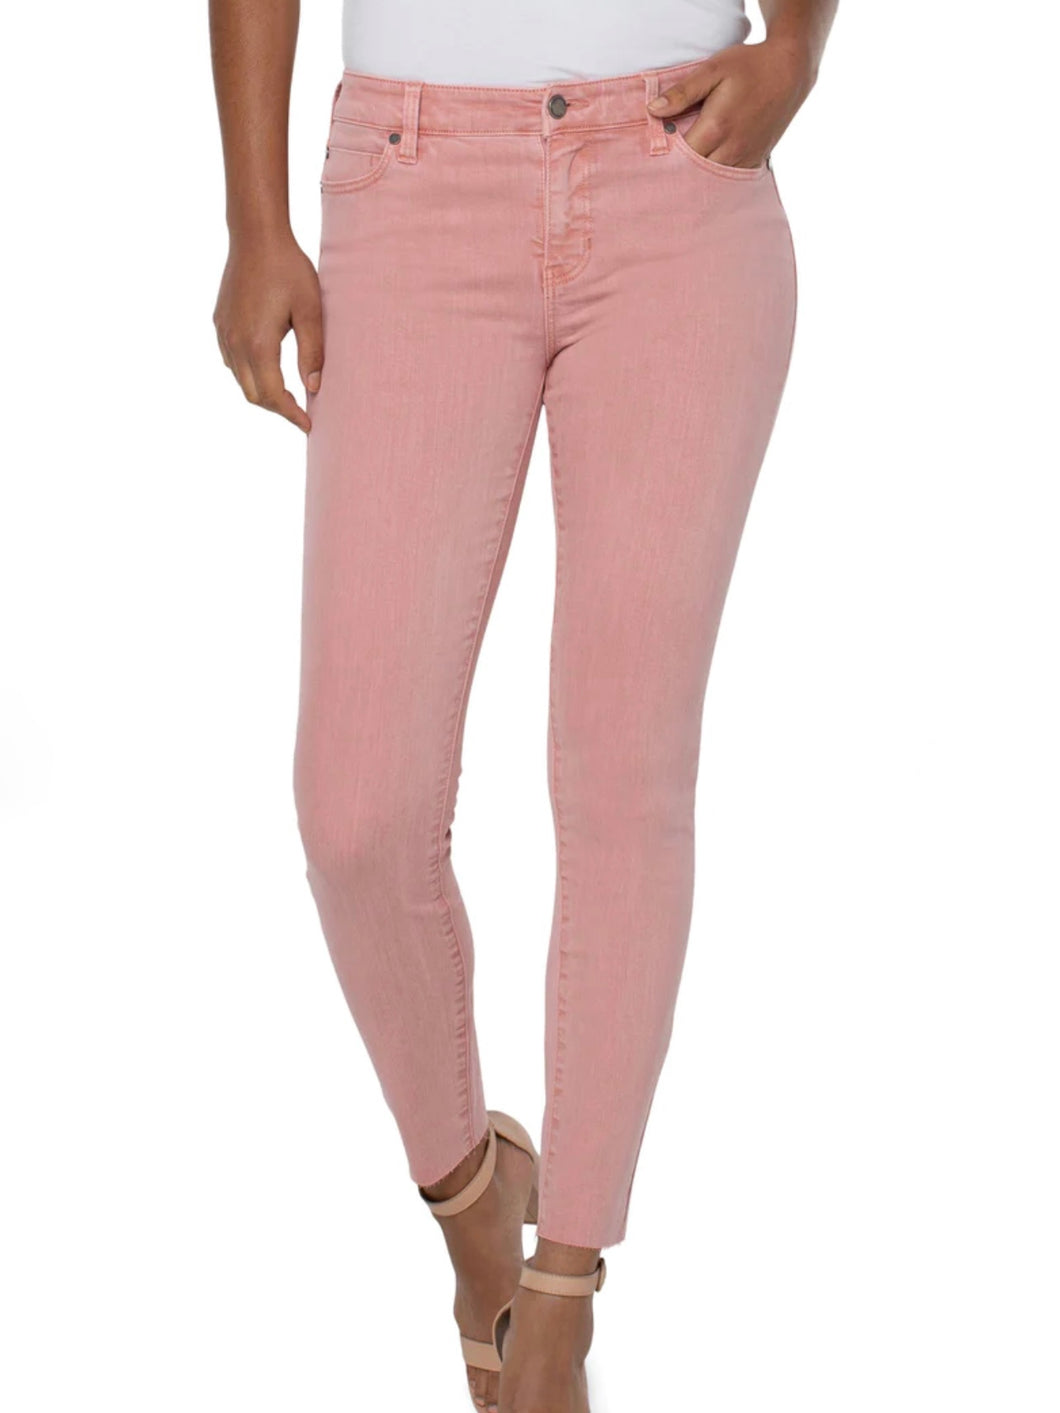 Woman wearing light pink skinny jeans.